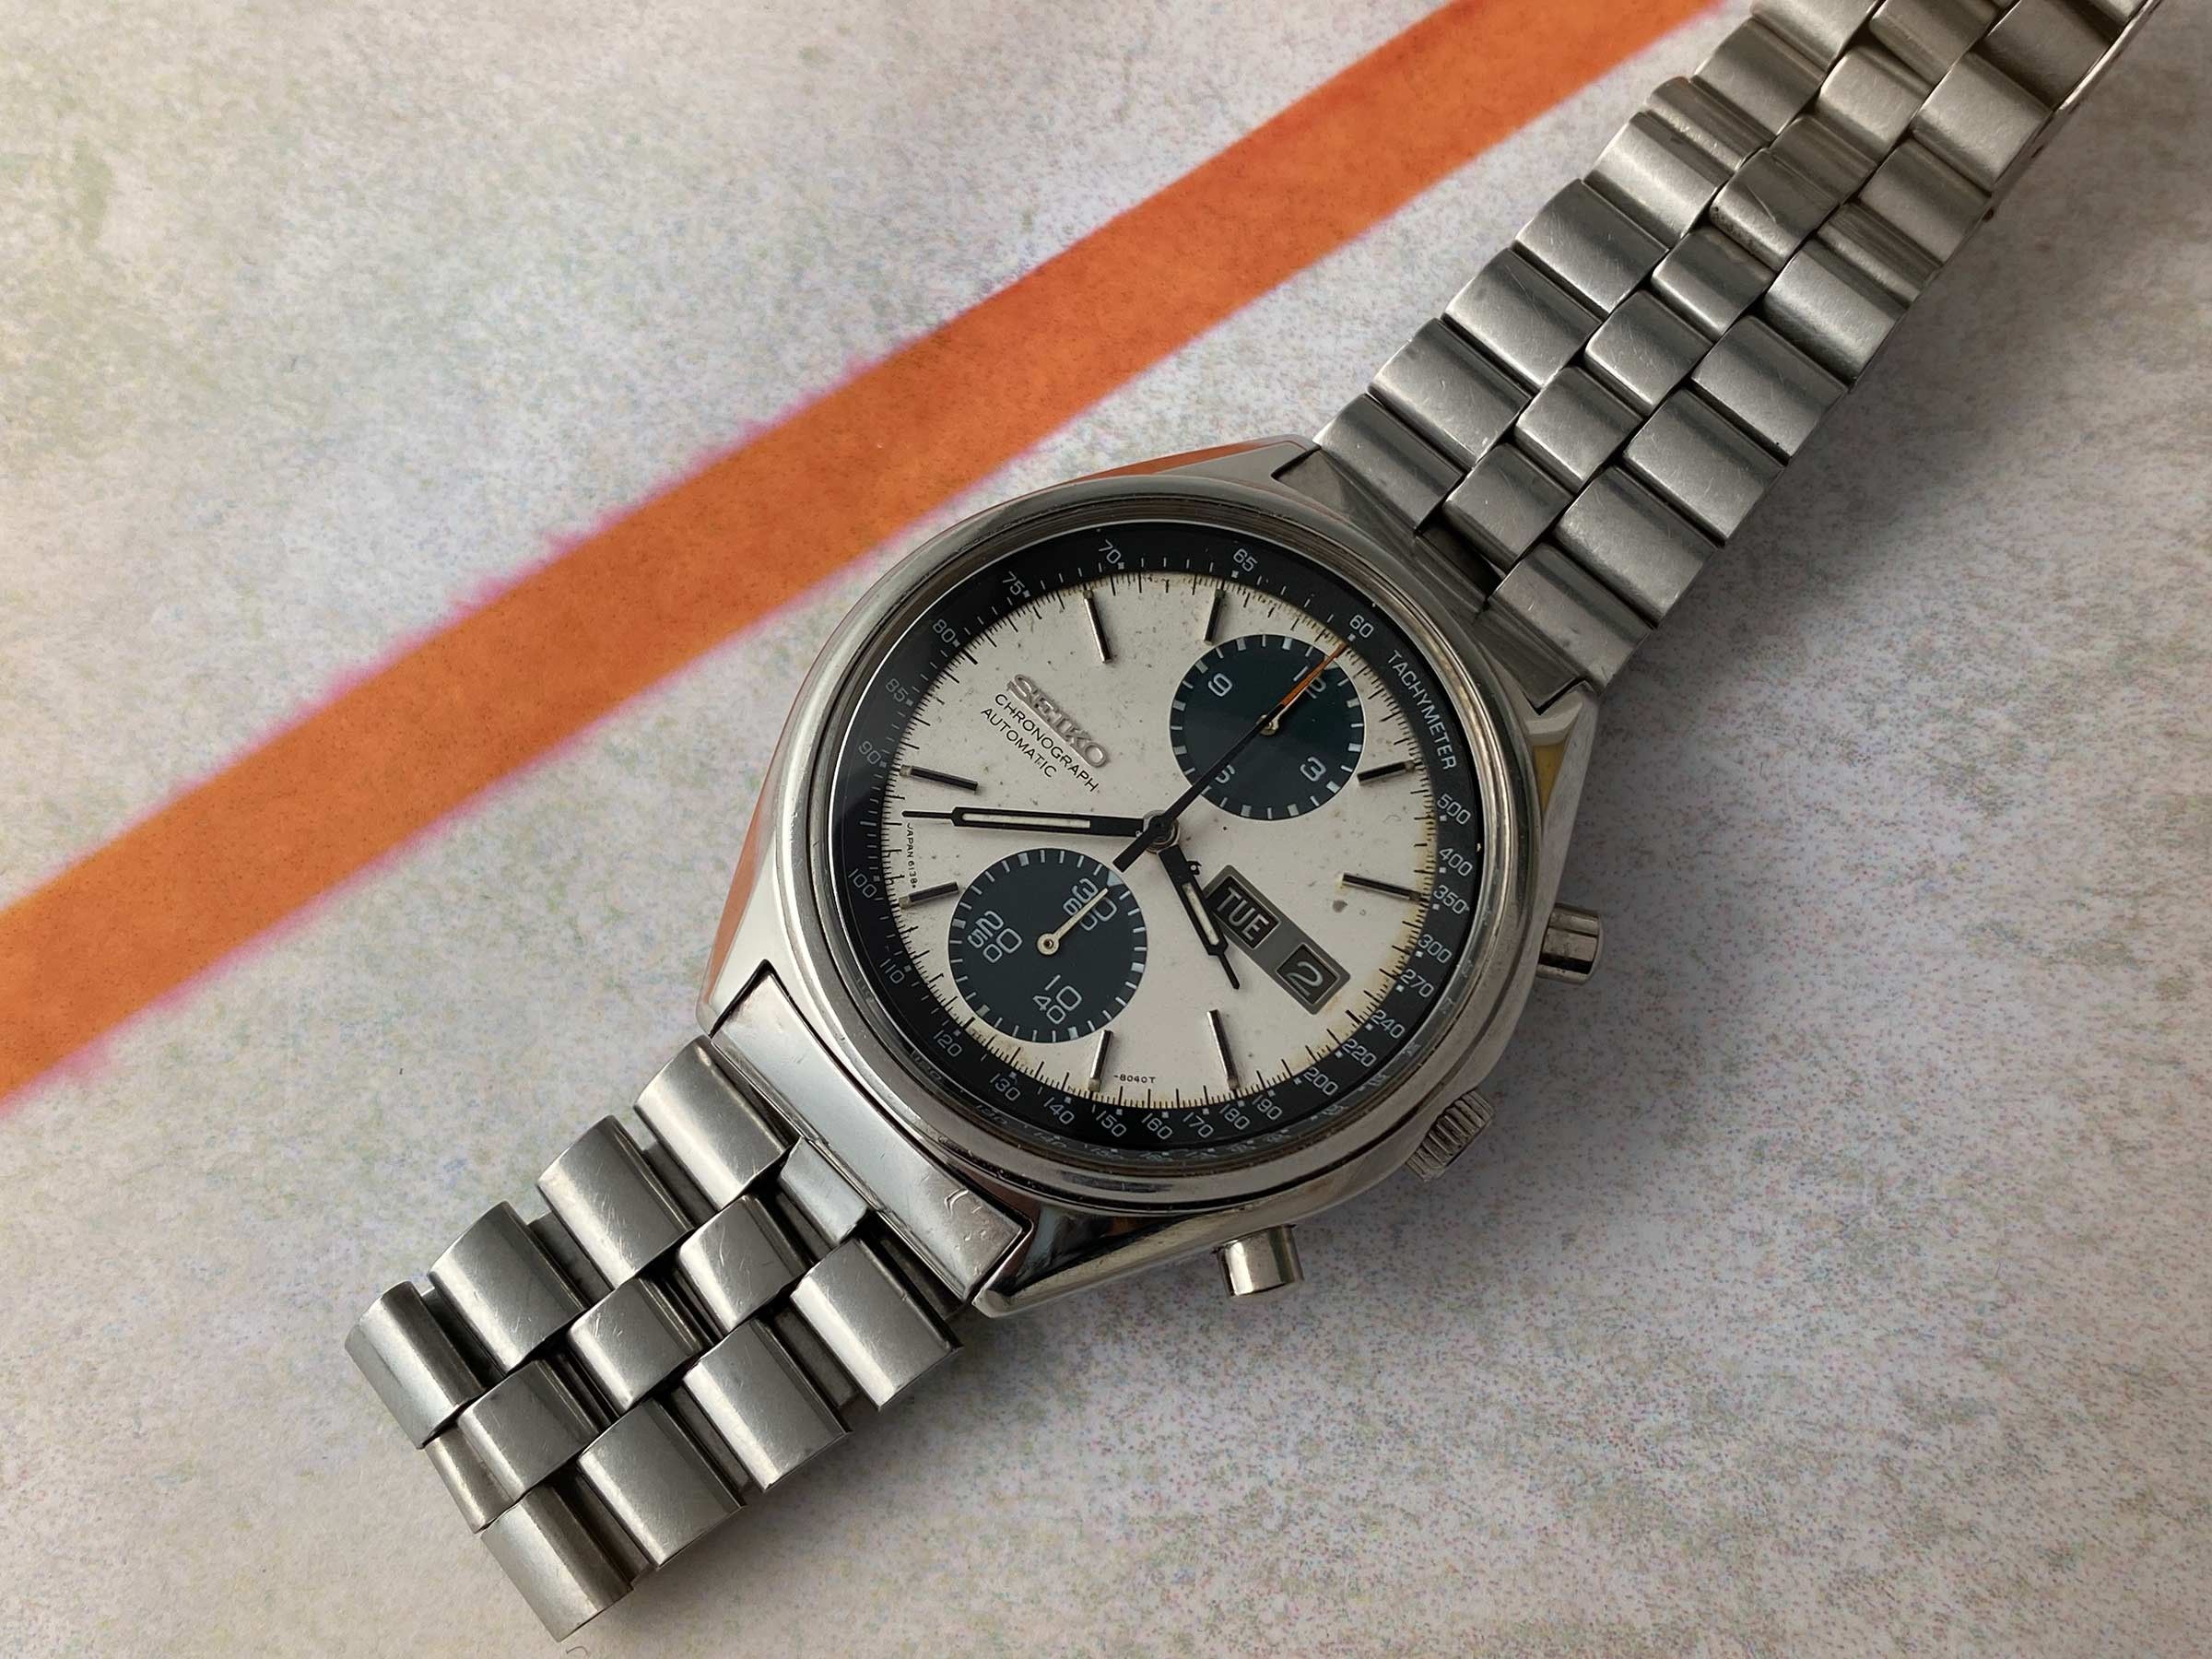 SEIKO PANDA Vintage automatic chronograph watch 1975 Cal. 6138 Ref. 6138-8020  JAPAN A *** ALL ORIGINAL *** Seiko Vintage watches - Watches83